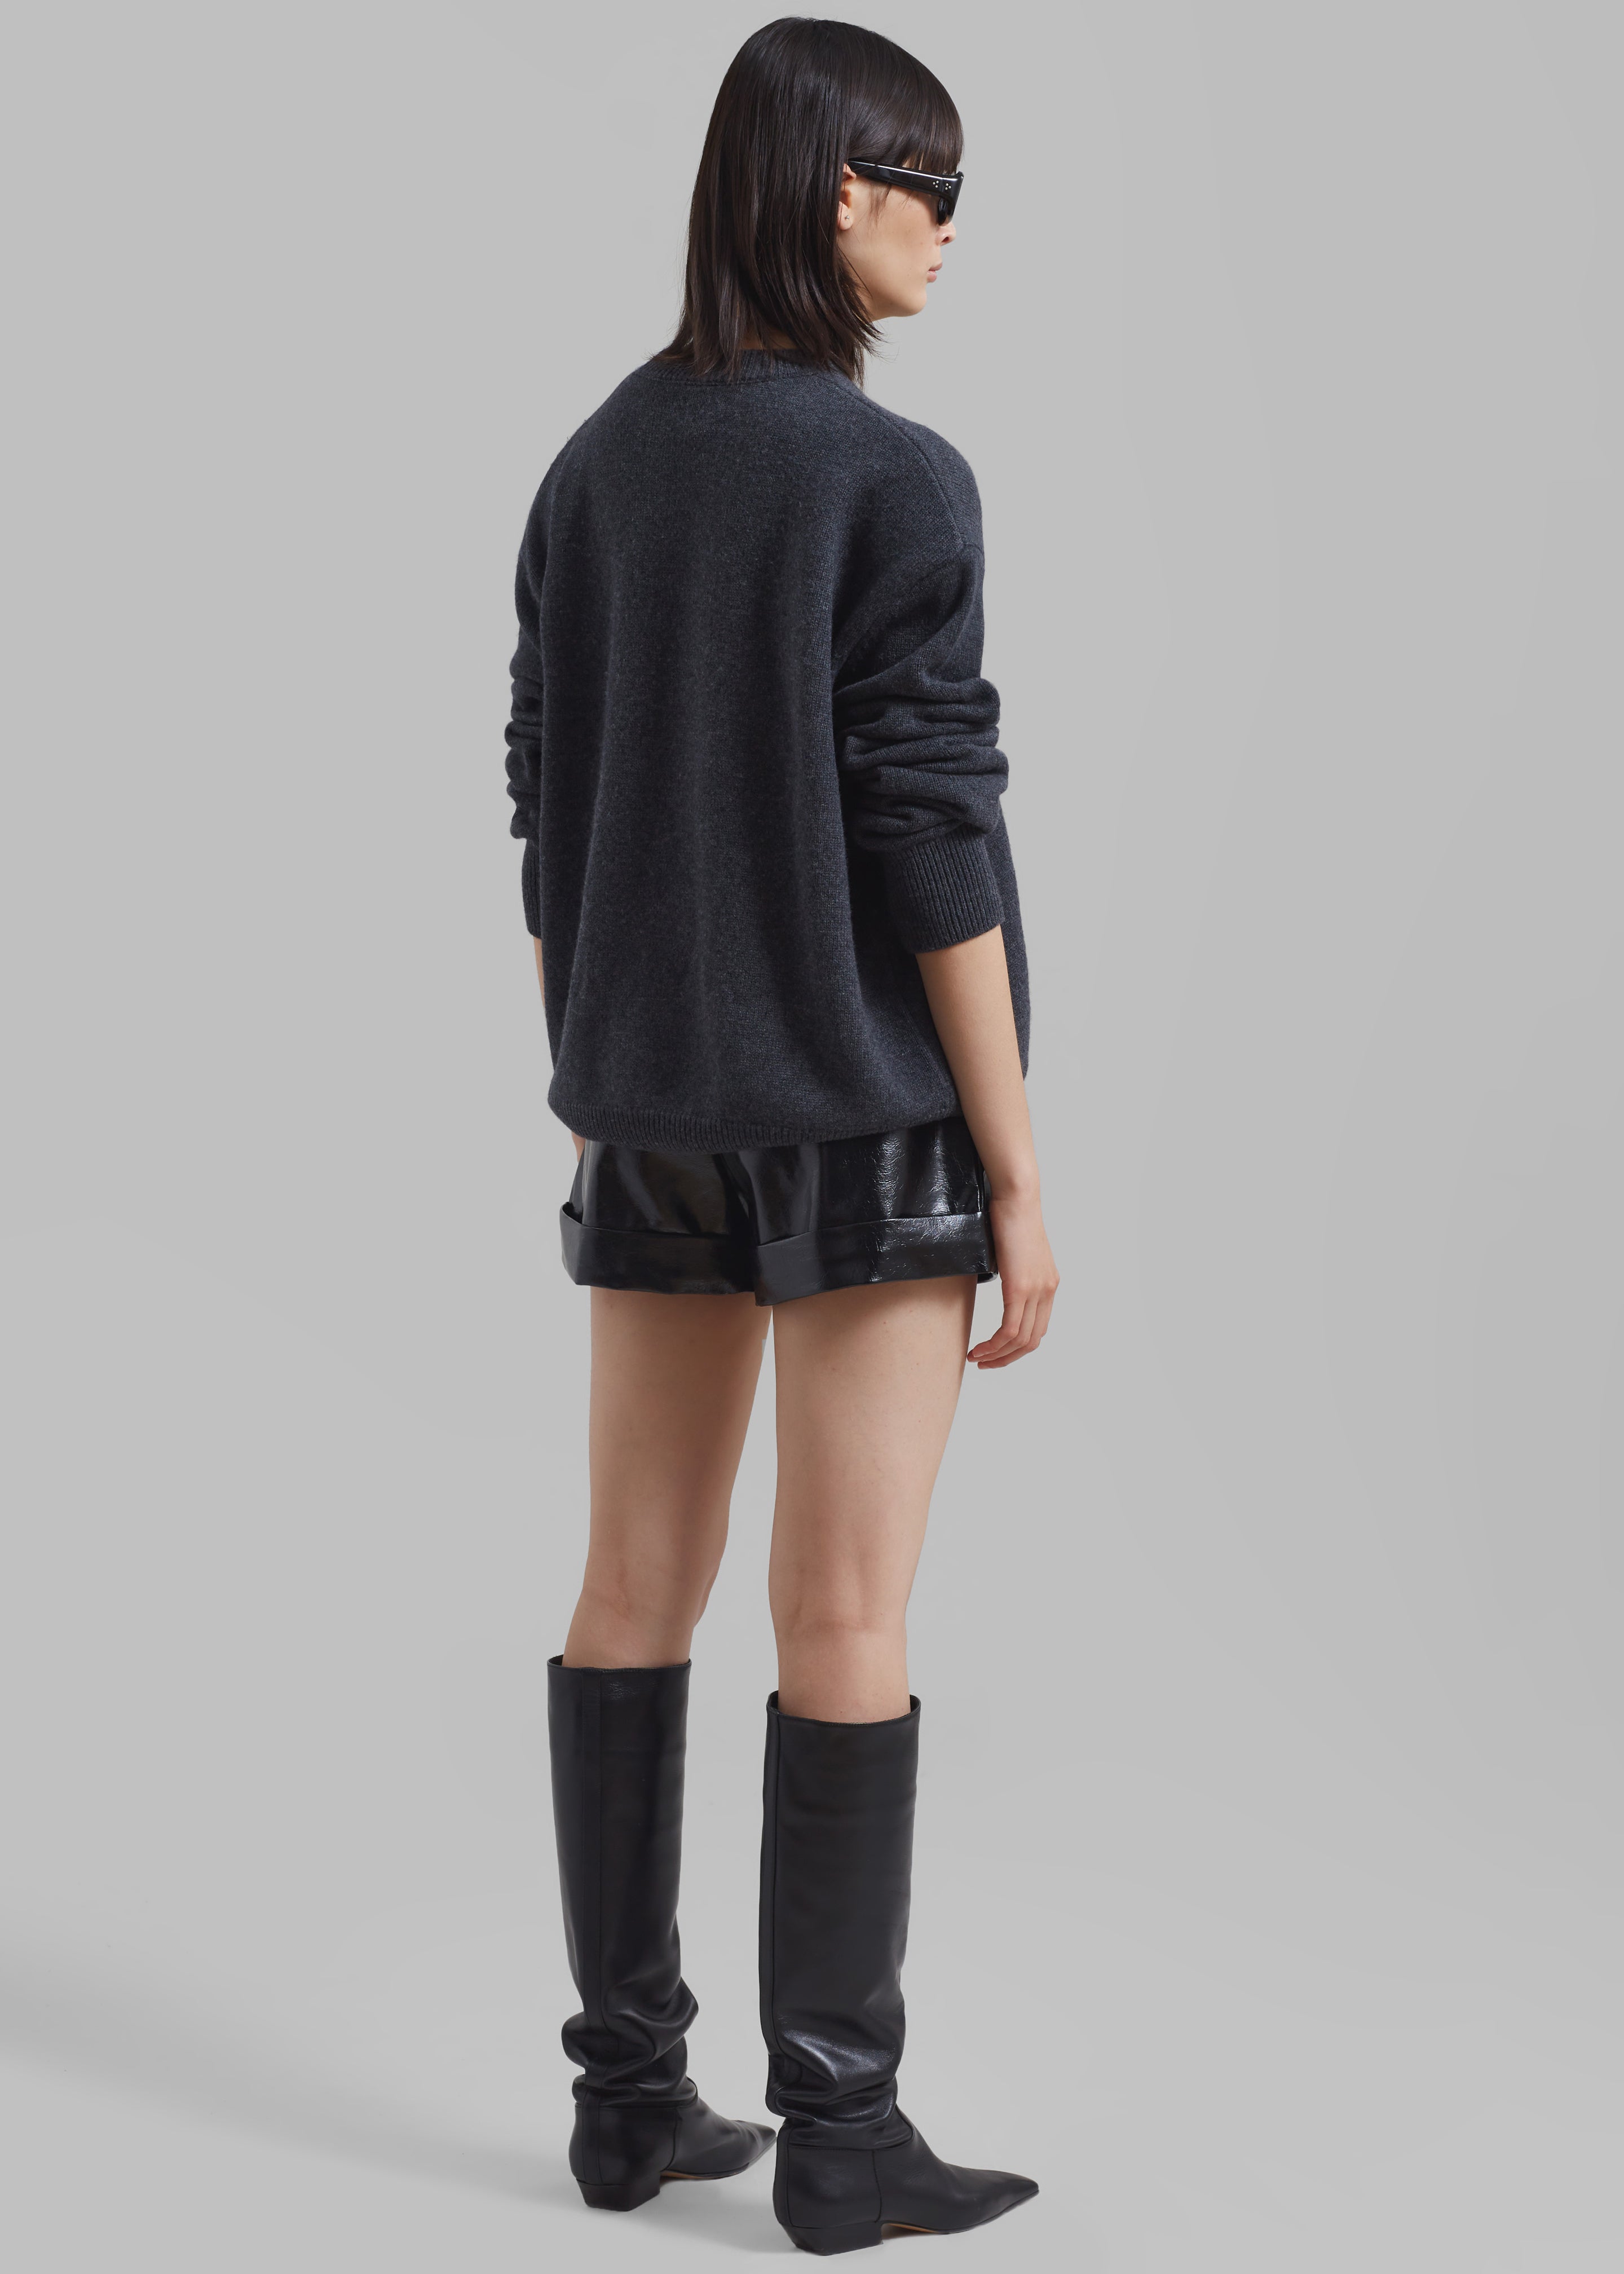 Kassy Faux Leather Shorts - Black - 6